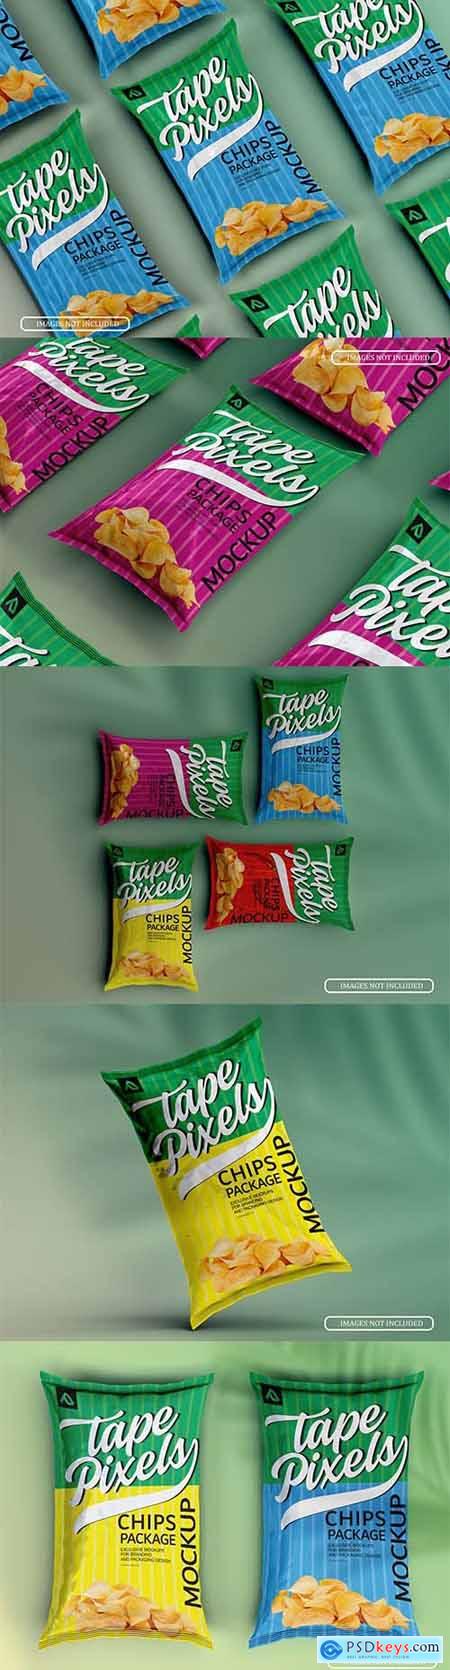 Lying potato chips bags mockup